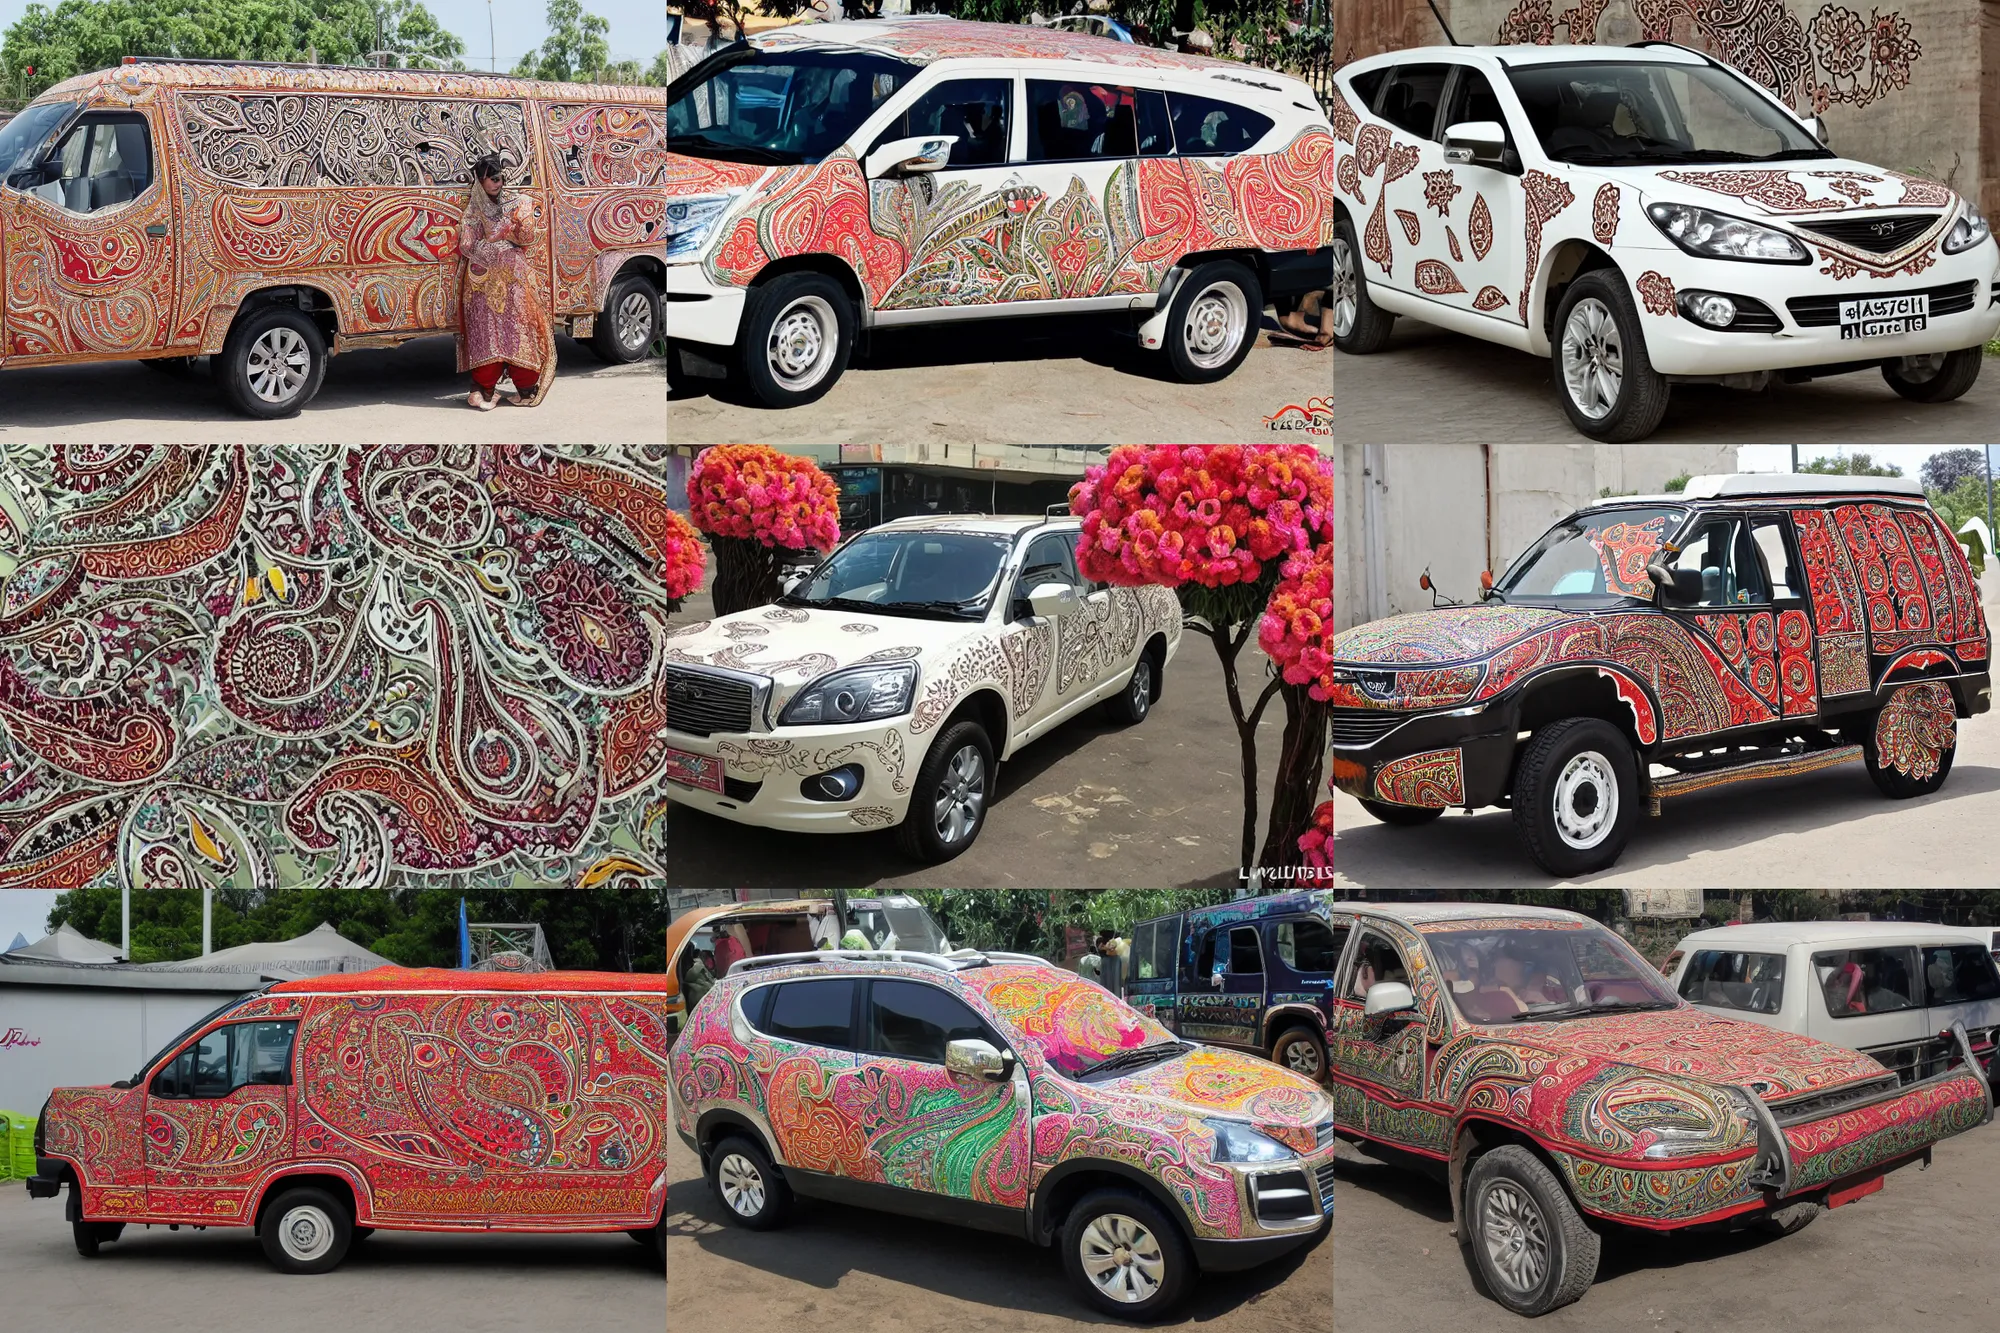 Prompt: haval f 7, floral design, pakistani or indian truck art design, ornate flower design, paisley, mehndi patterns